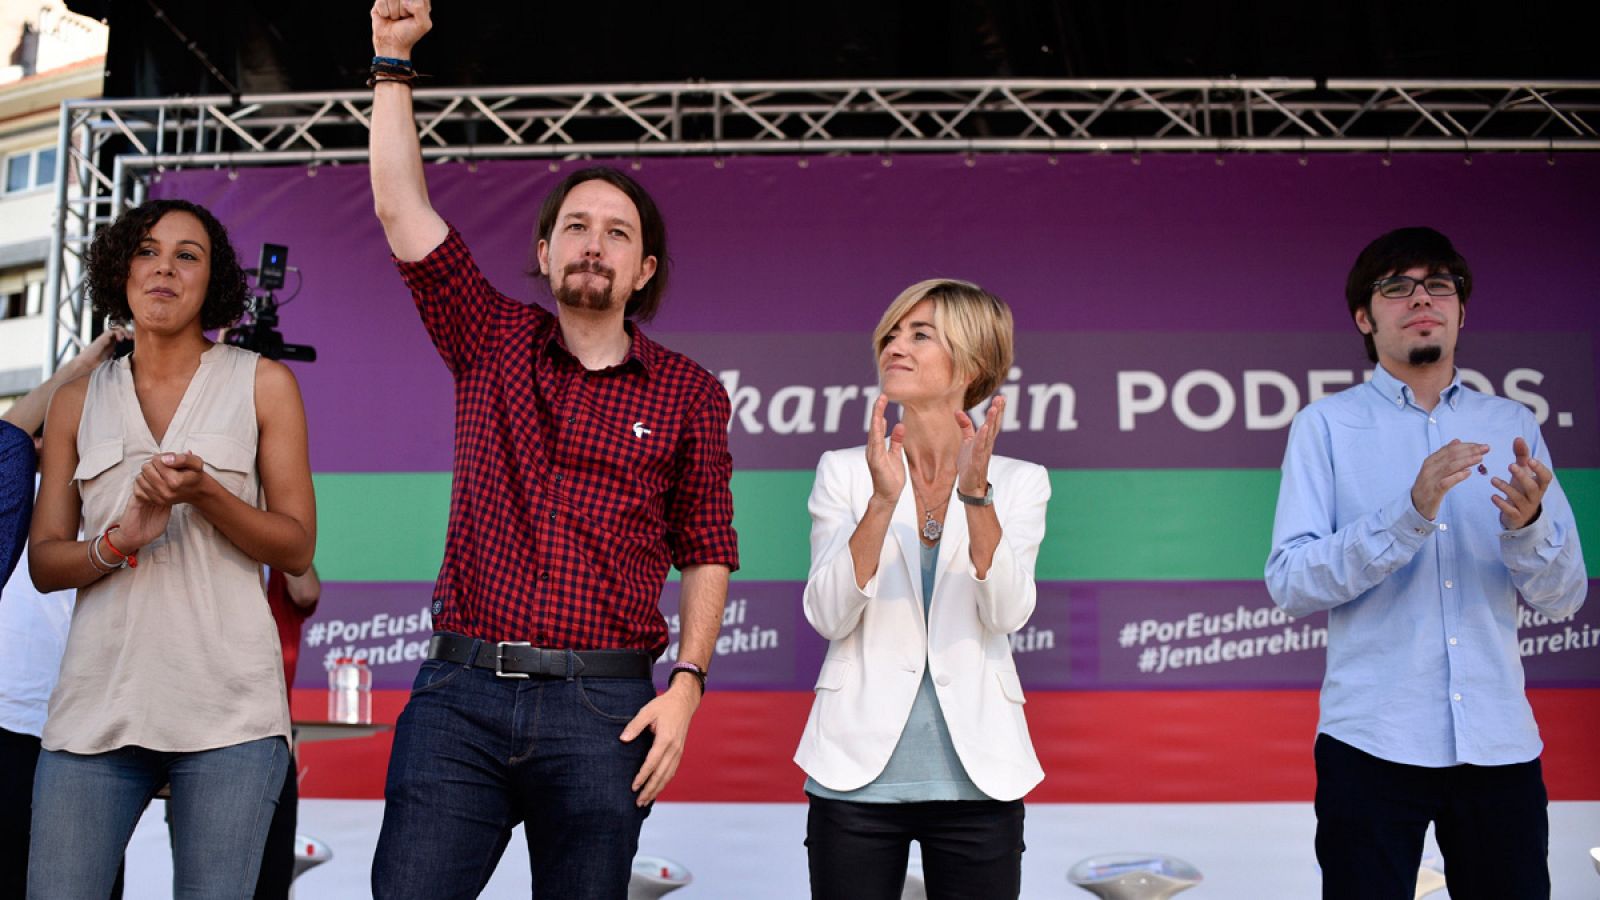 Pablo Iglesias y la candidata de Podemos a la Lehendekariza, Pili Zabala, en un mitin en Barakaldo (Bizkaia).